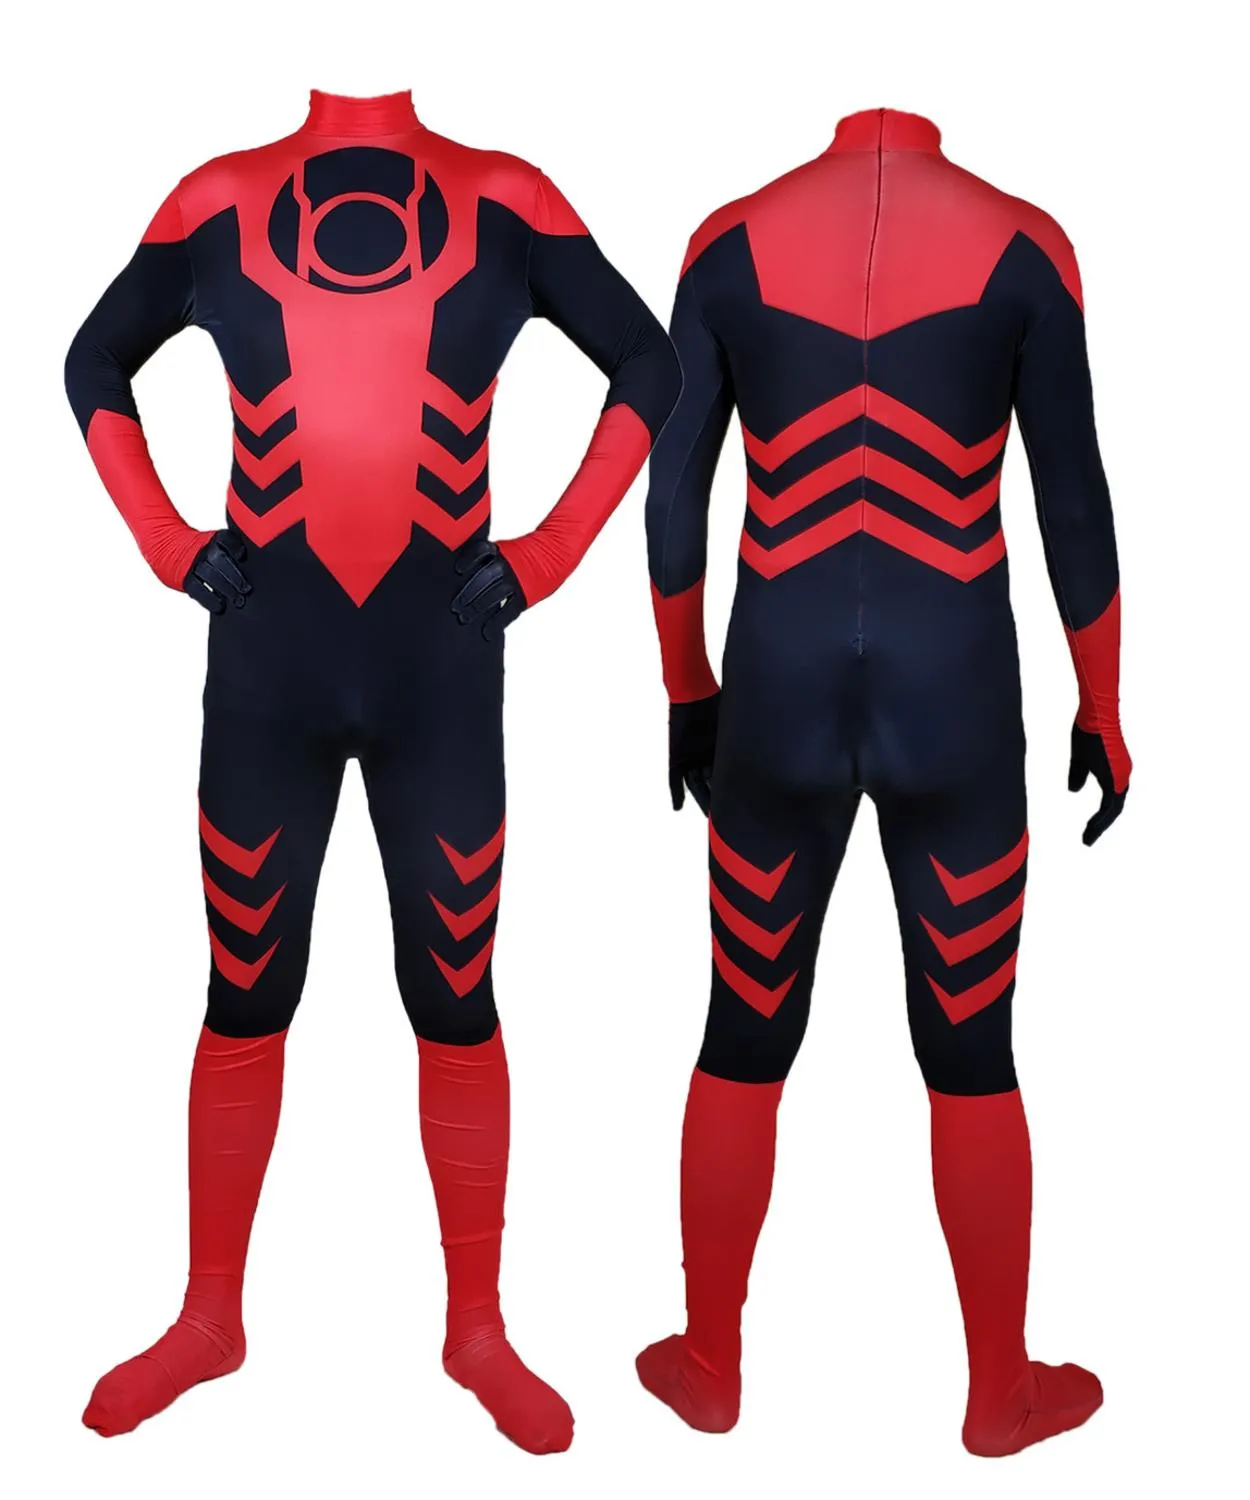 Vuxna barnen röd lykta cosplay kostym halloween zentai bodysuit man pojkar manlig superhjälte kostym